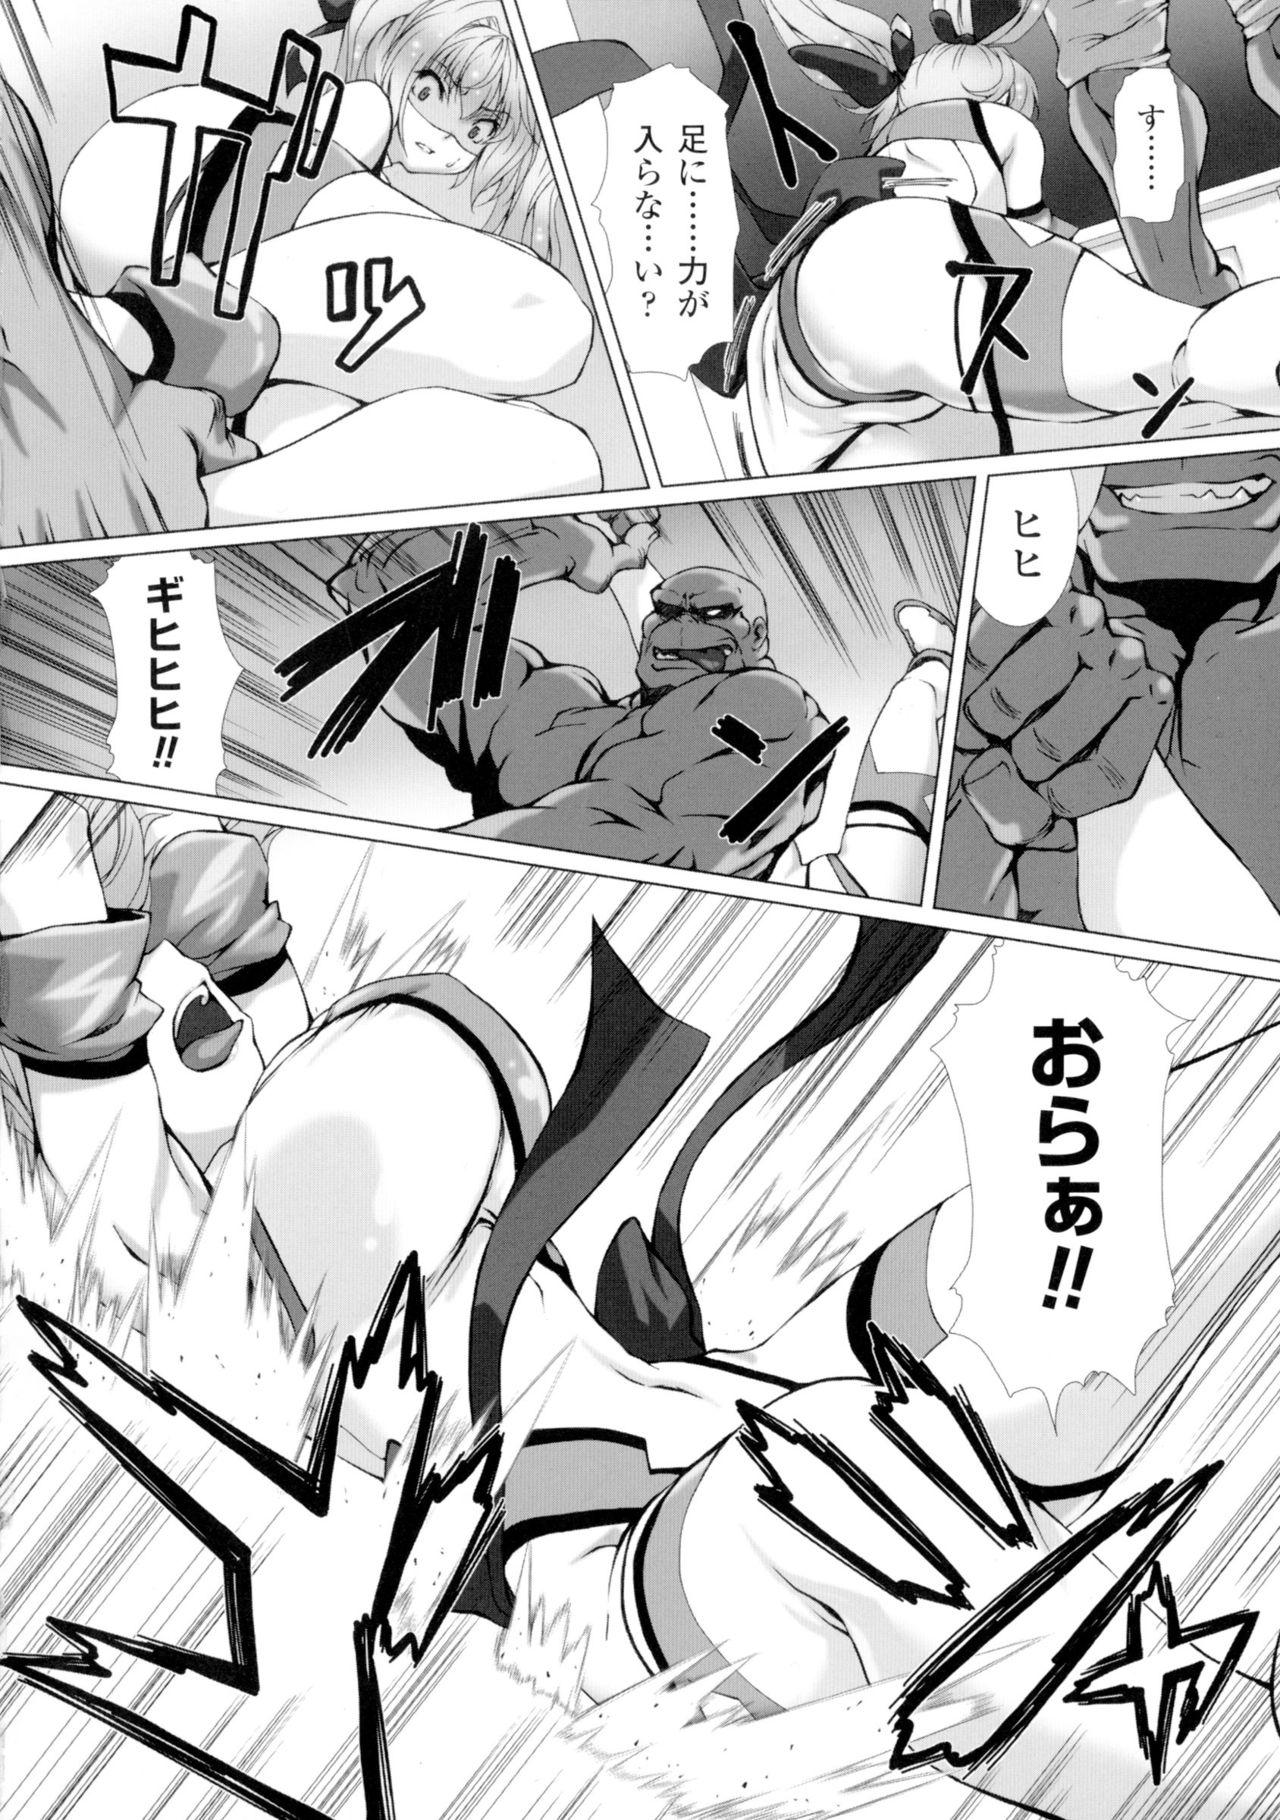 Seigi no Heroine Kangoku File DX Vol. 2 9